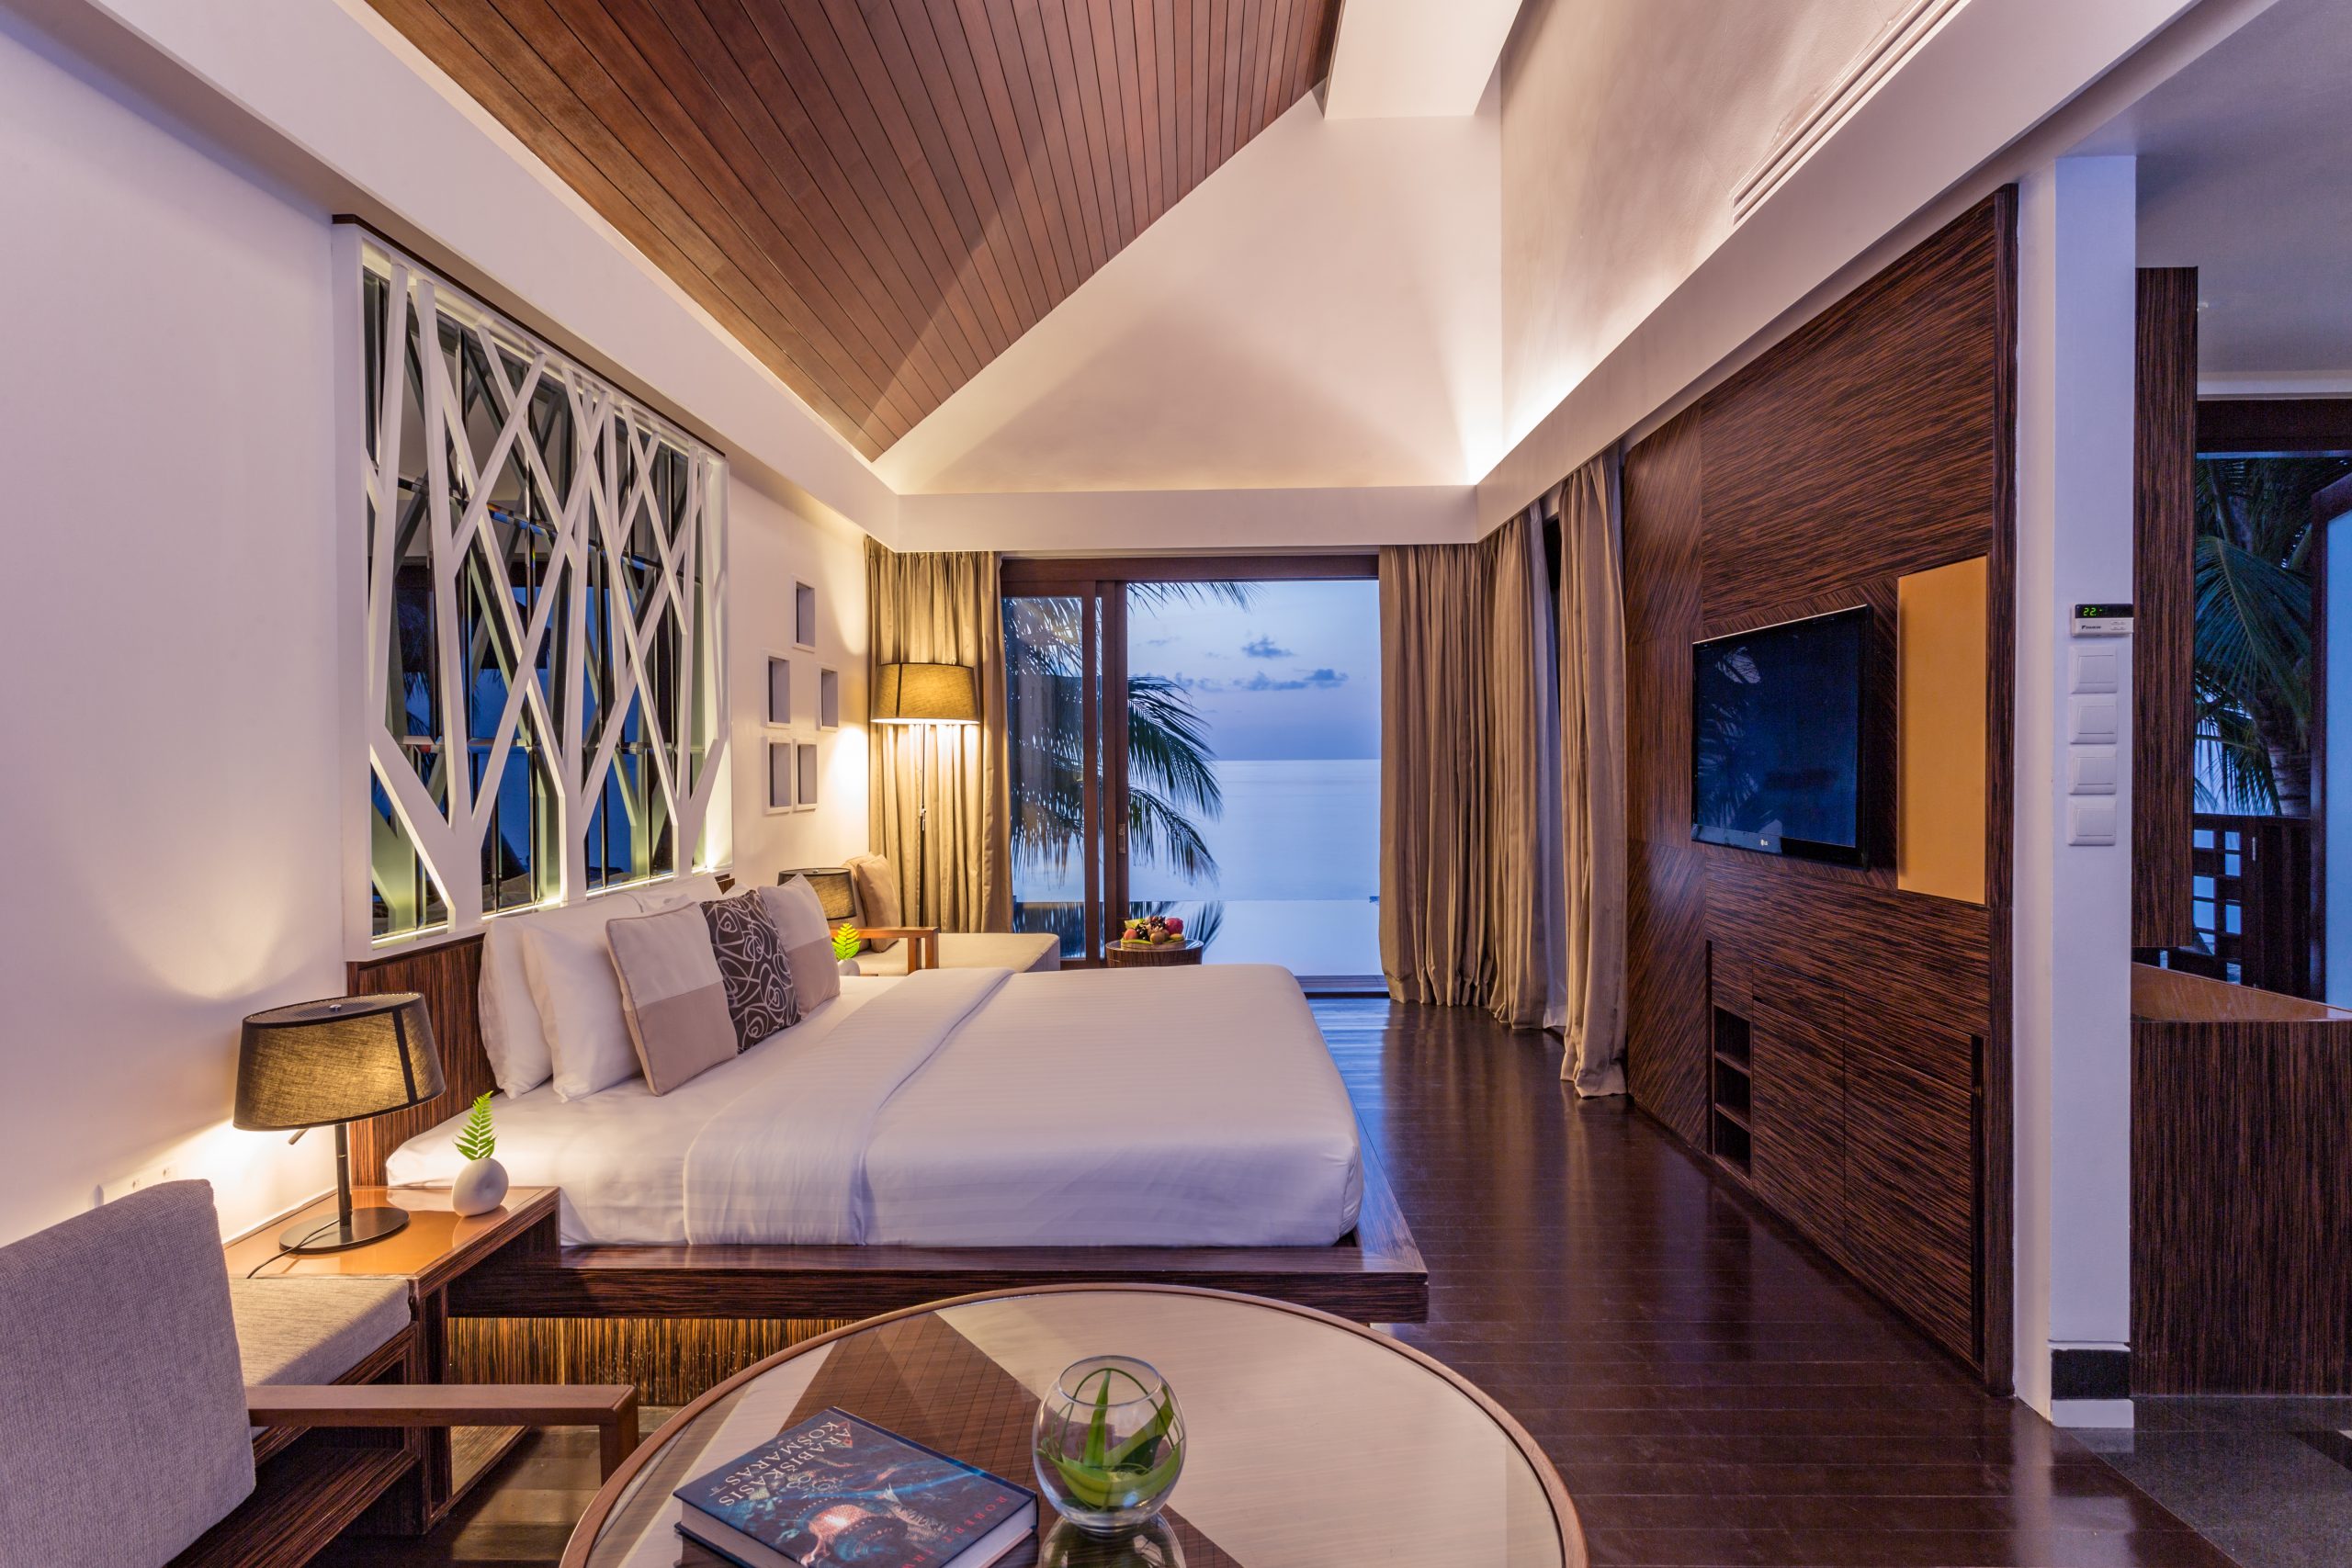 Bedroom at Bandos Island Resort in Maldives